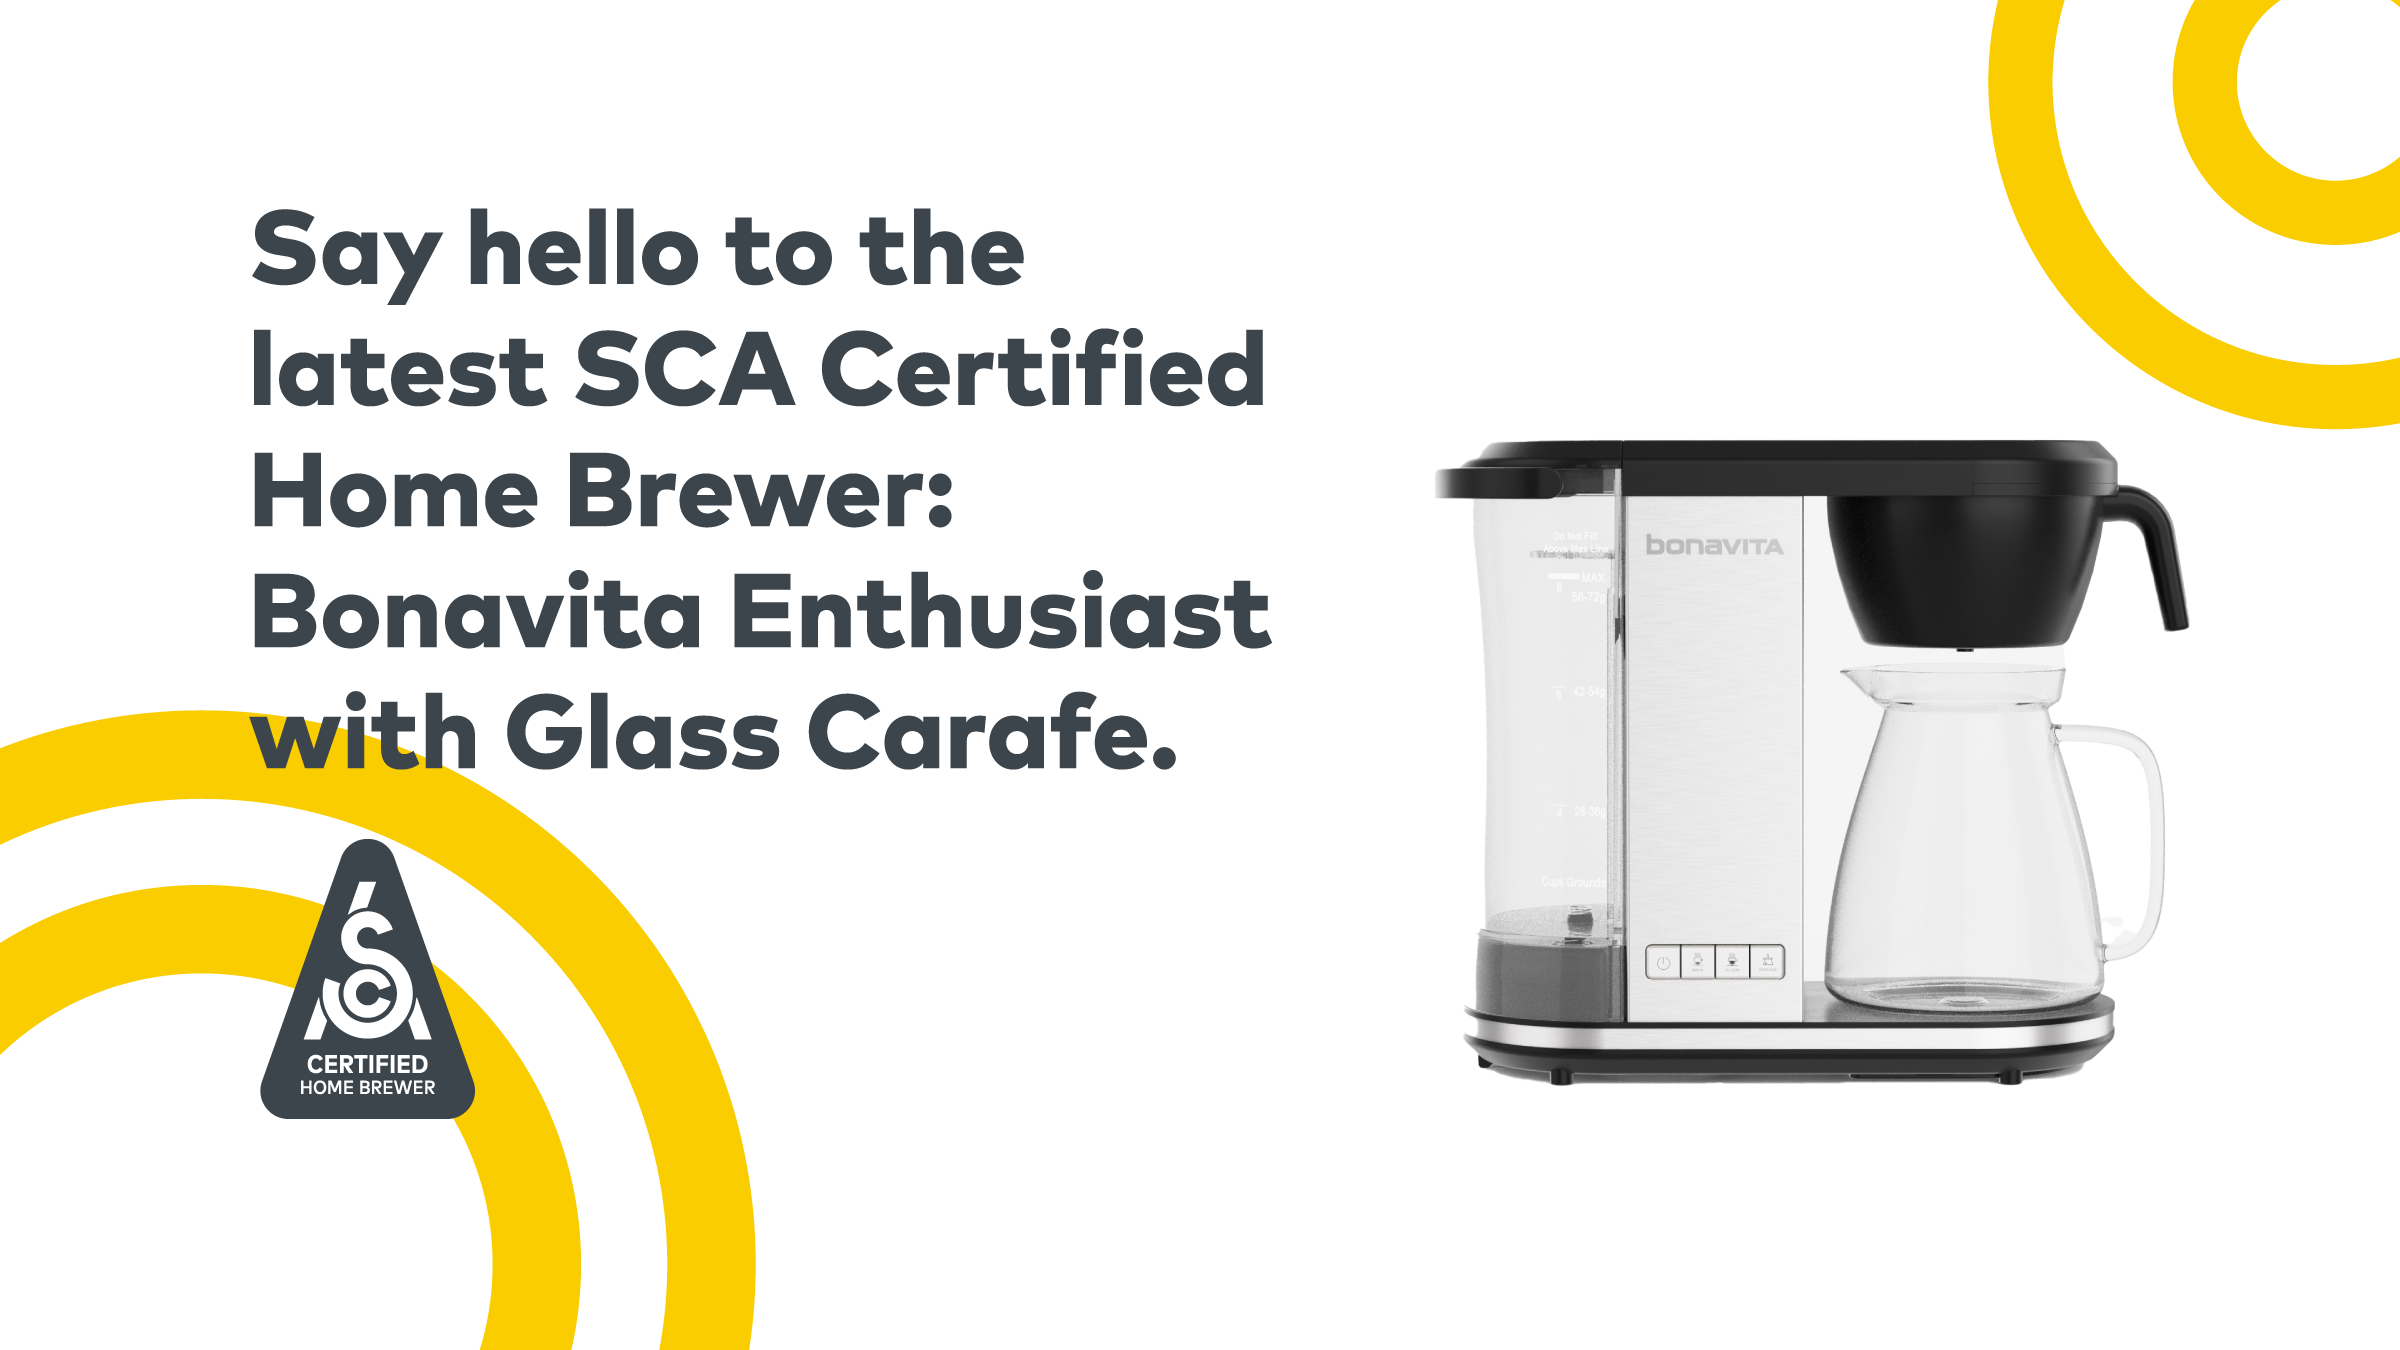 Bonavita 8-Cup Glass Carafe Coffee Brewer